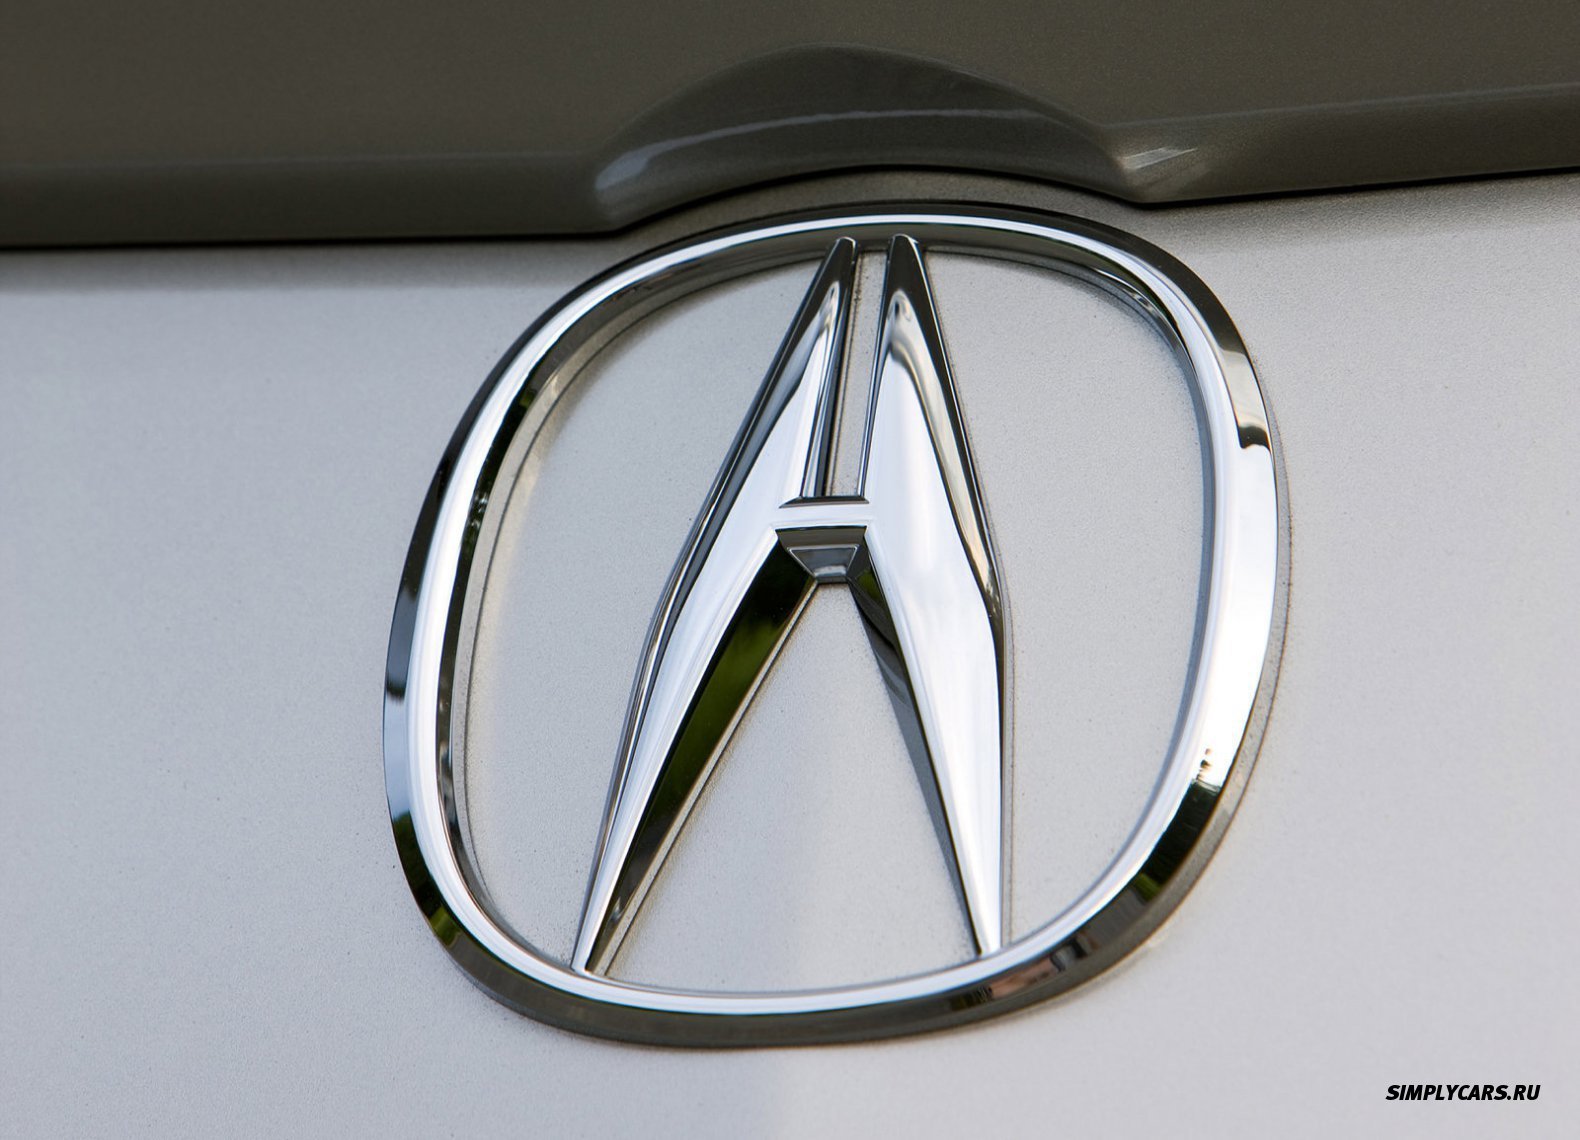 Машина три треугольника. Acura Emblem. Акура значок. Значок Акура и Инфинити. Тойота Акура значок.